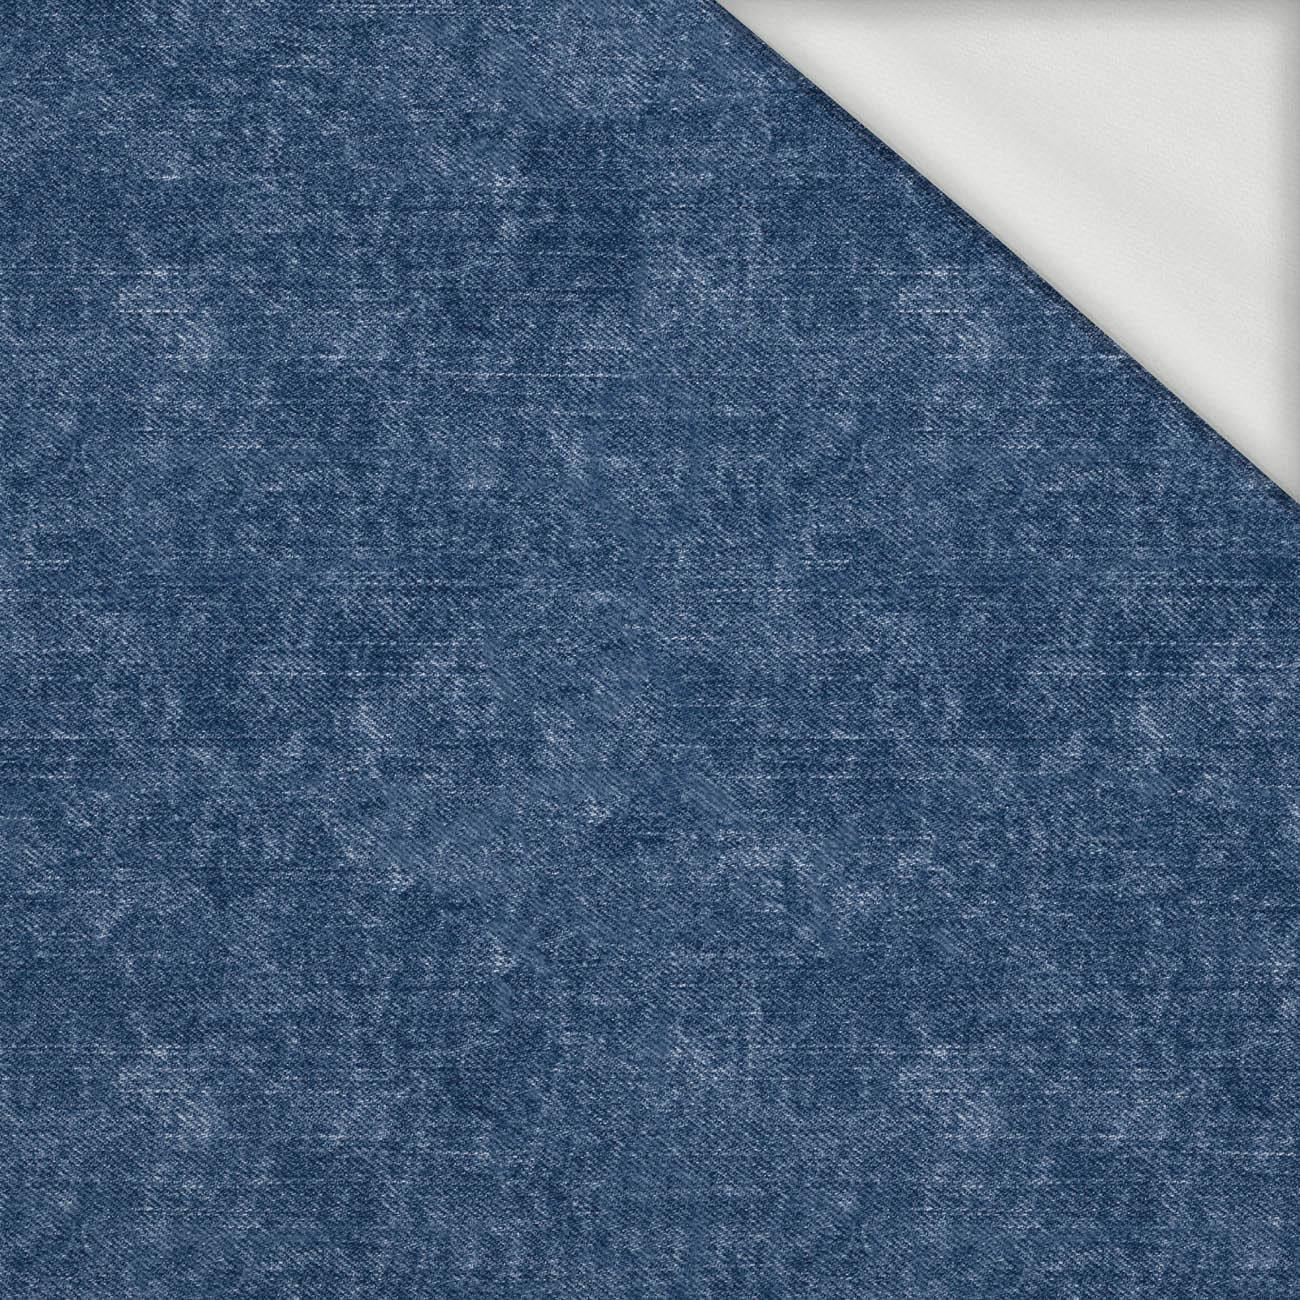 ACID WASH / DARK BLUE - looped knit fabric - Classic with elastane - Looped  sweatshirts - Printed patterns fabrics - Dresówka.pl